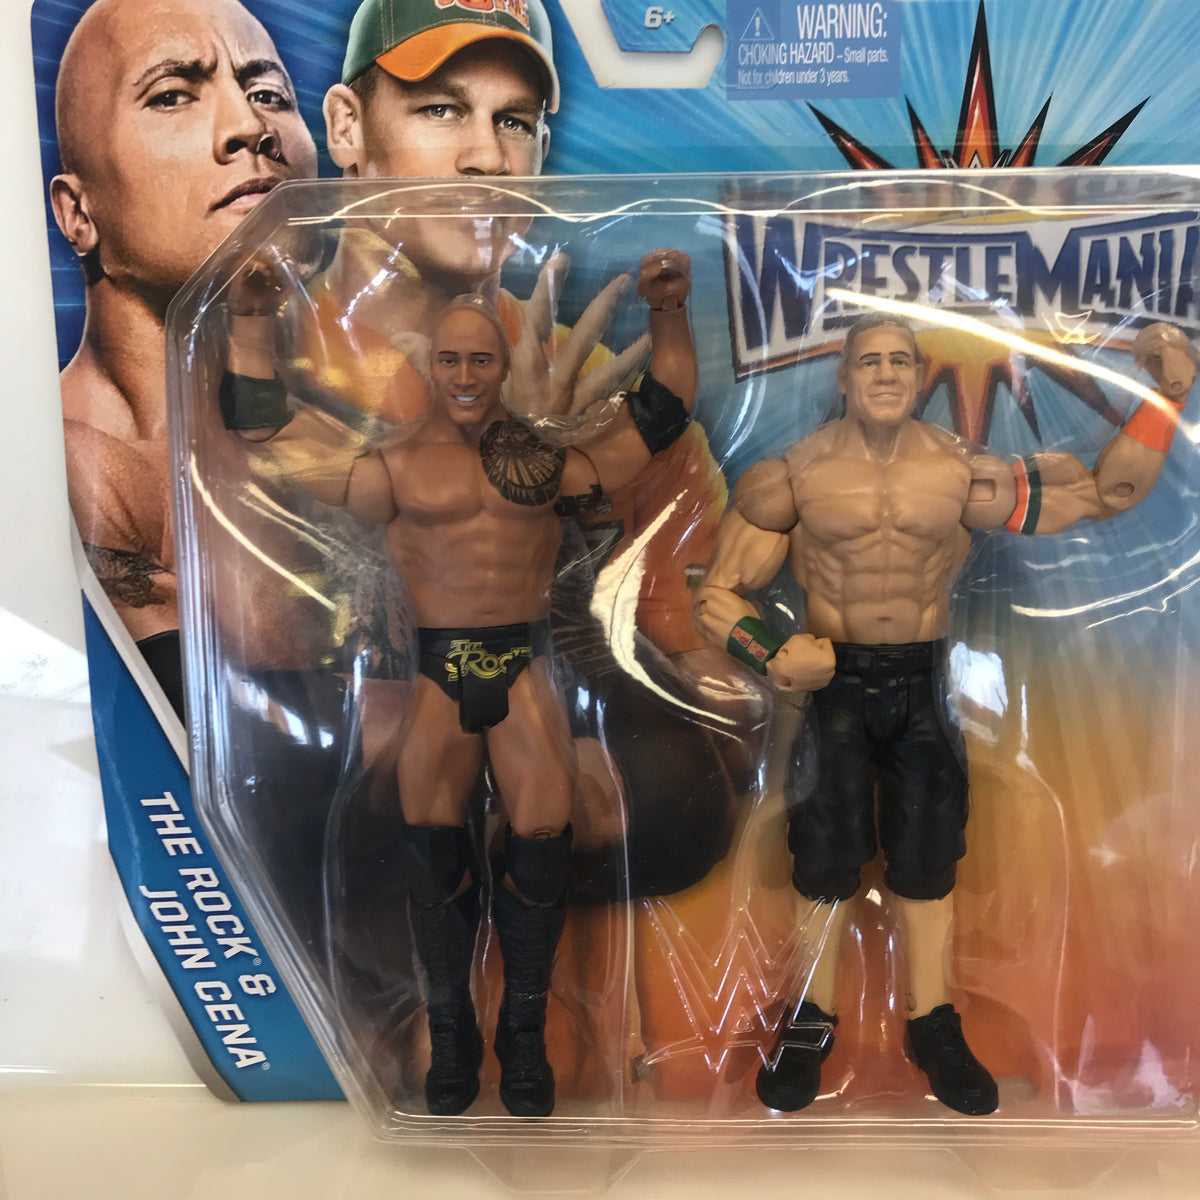 WWE WrestleMania The Rock & John Cena Figures, 2 Pack : : Toys